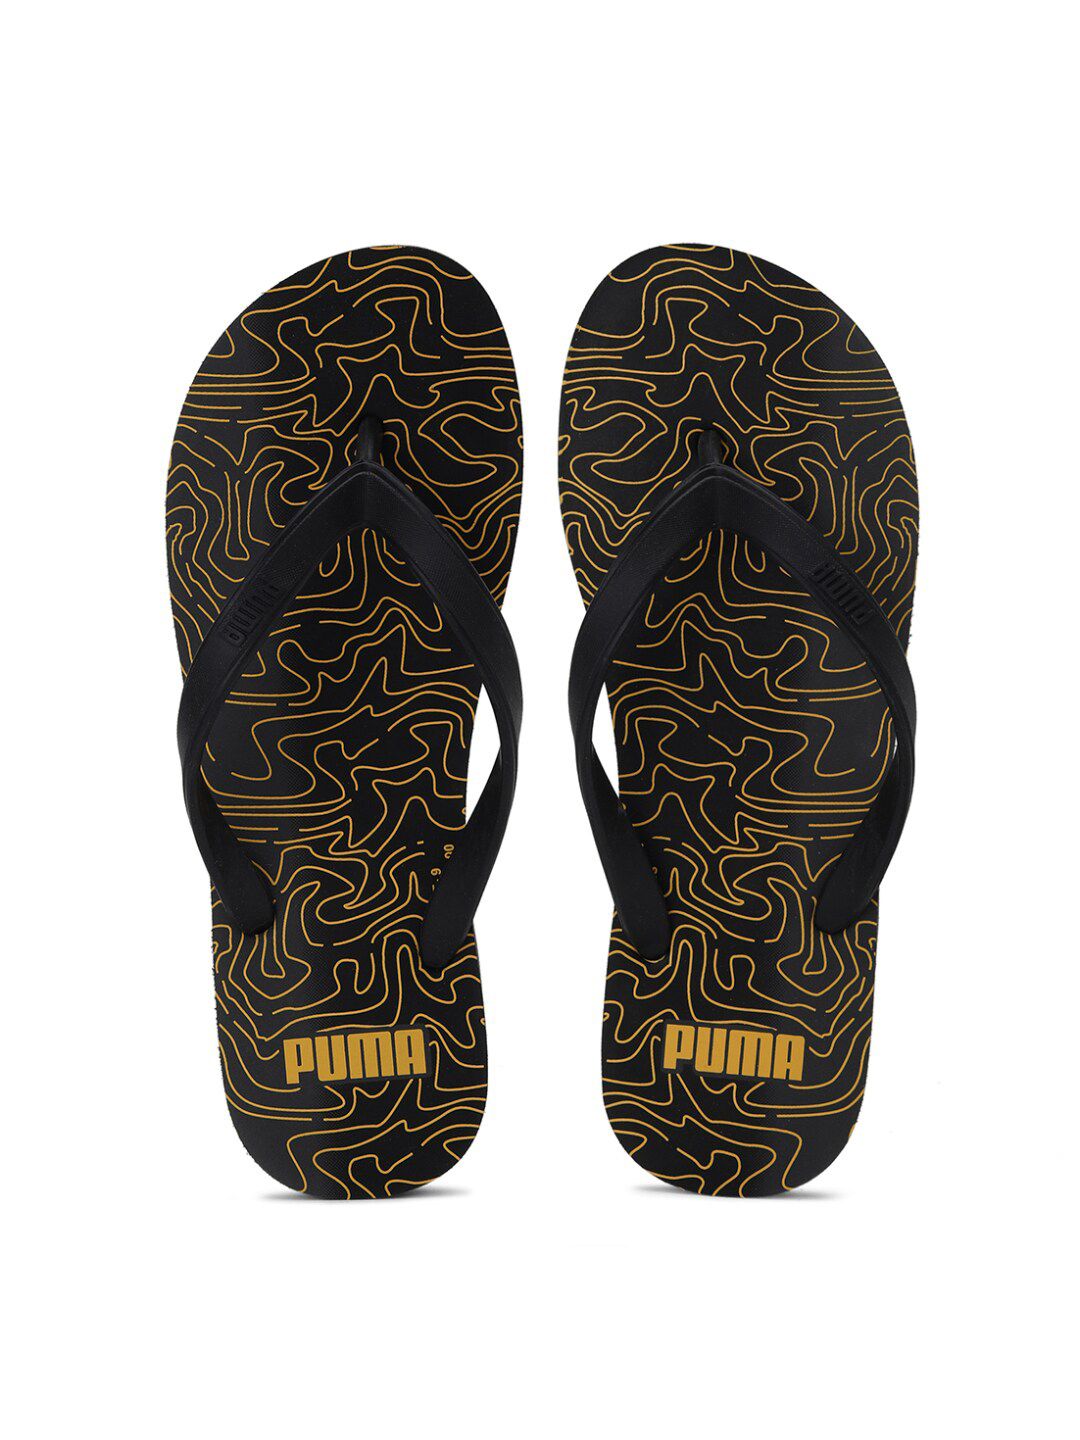 Puma Unisex Black & Yellow Printed Thong Flip-Flops Price in India